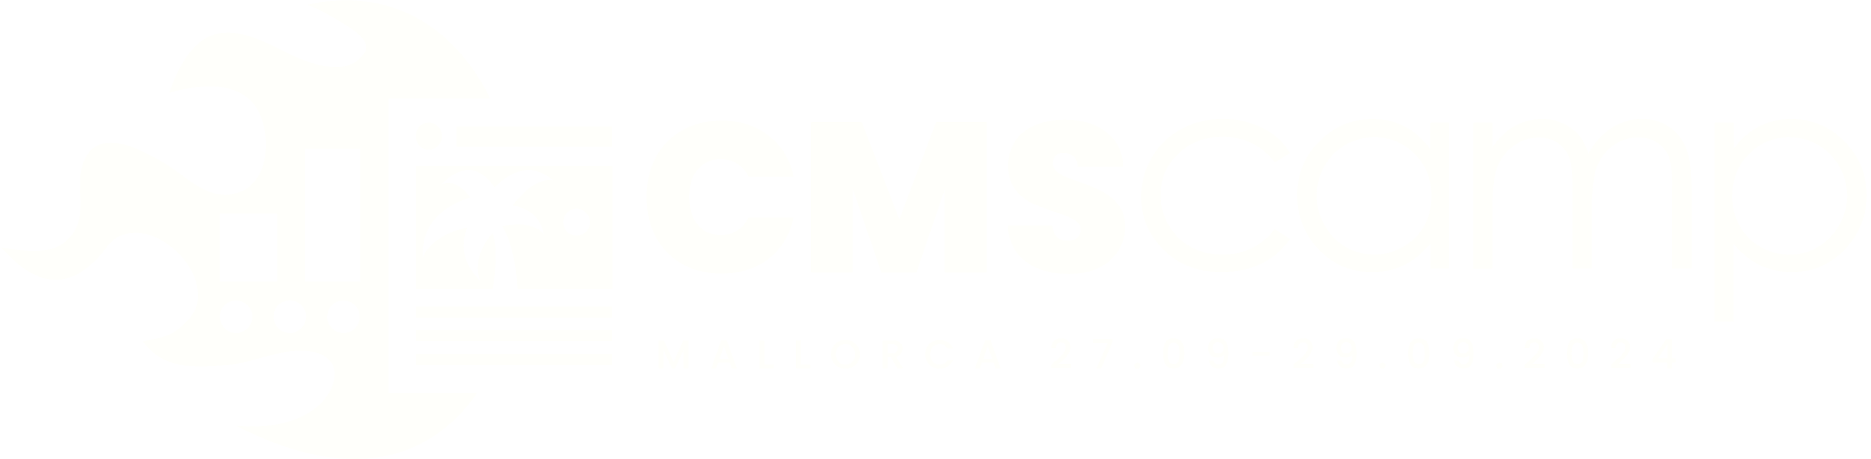 CMScamp logo